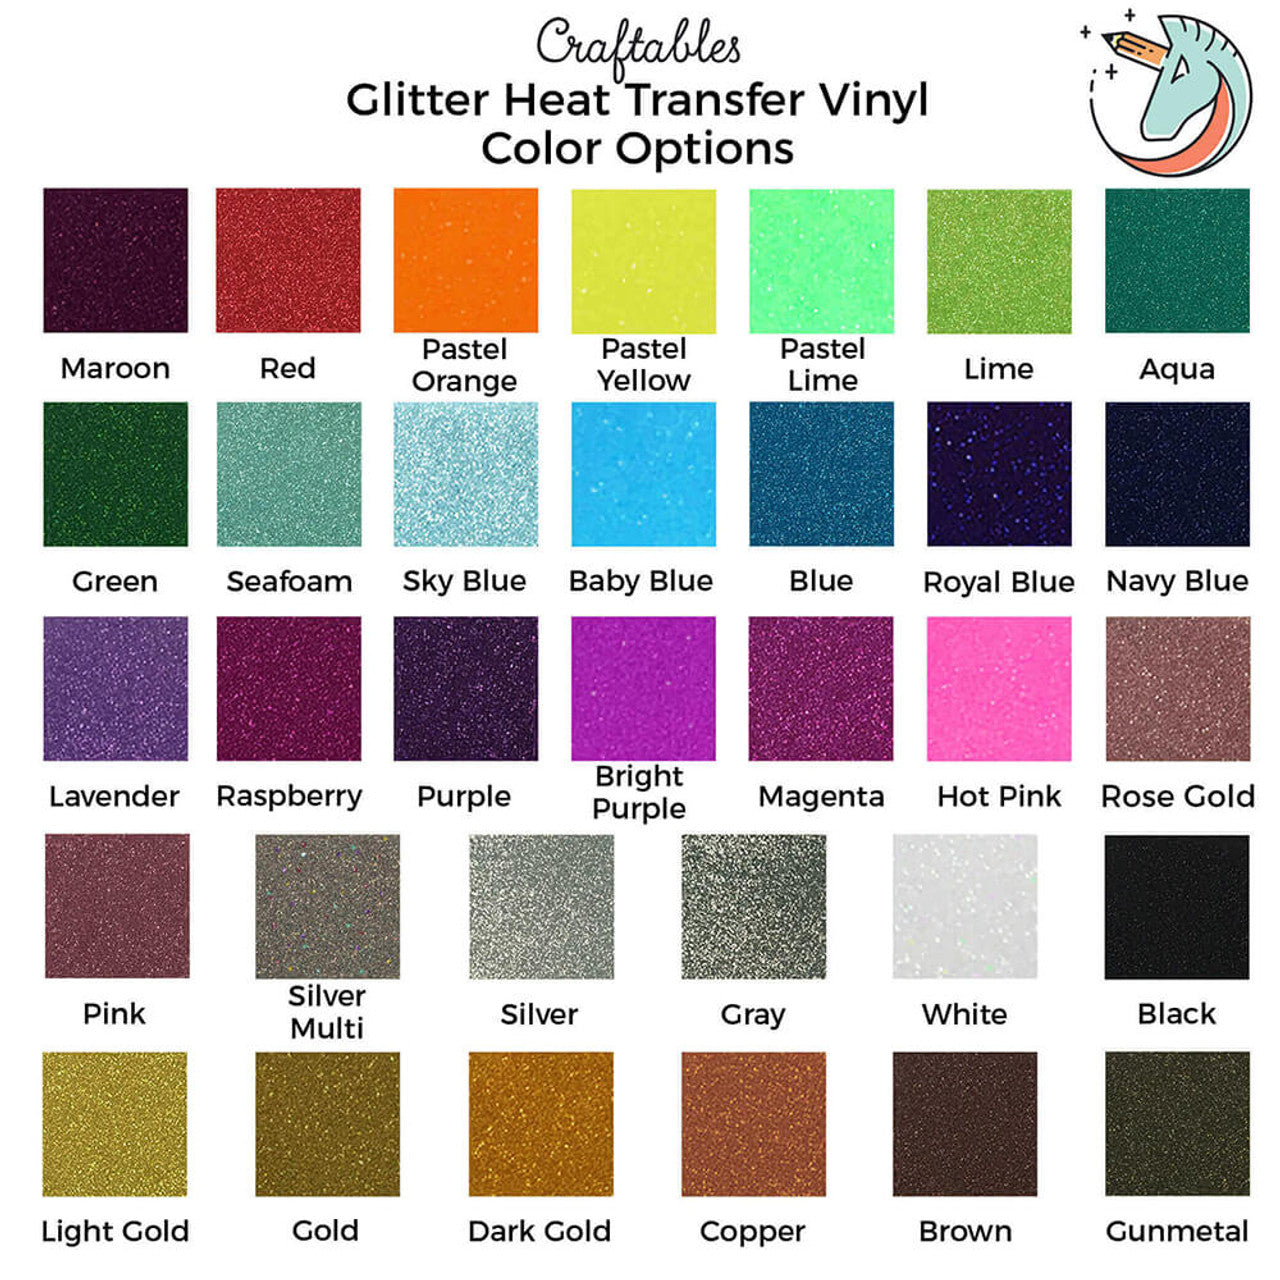 Bright Purple Glitter Heat Transfer Vinyl Sheets By Craftables